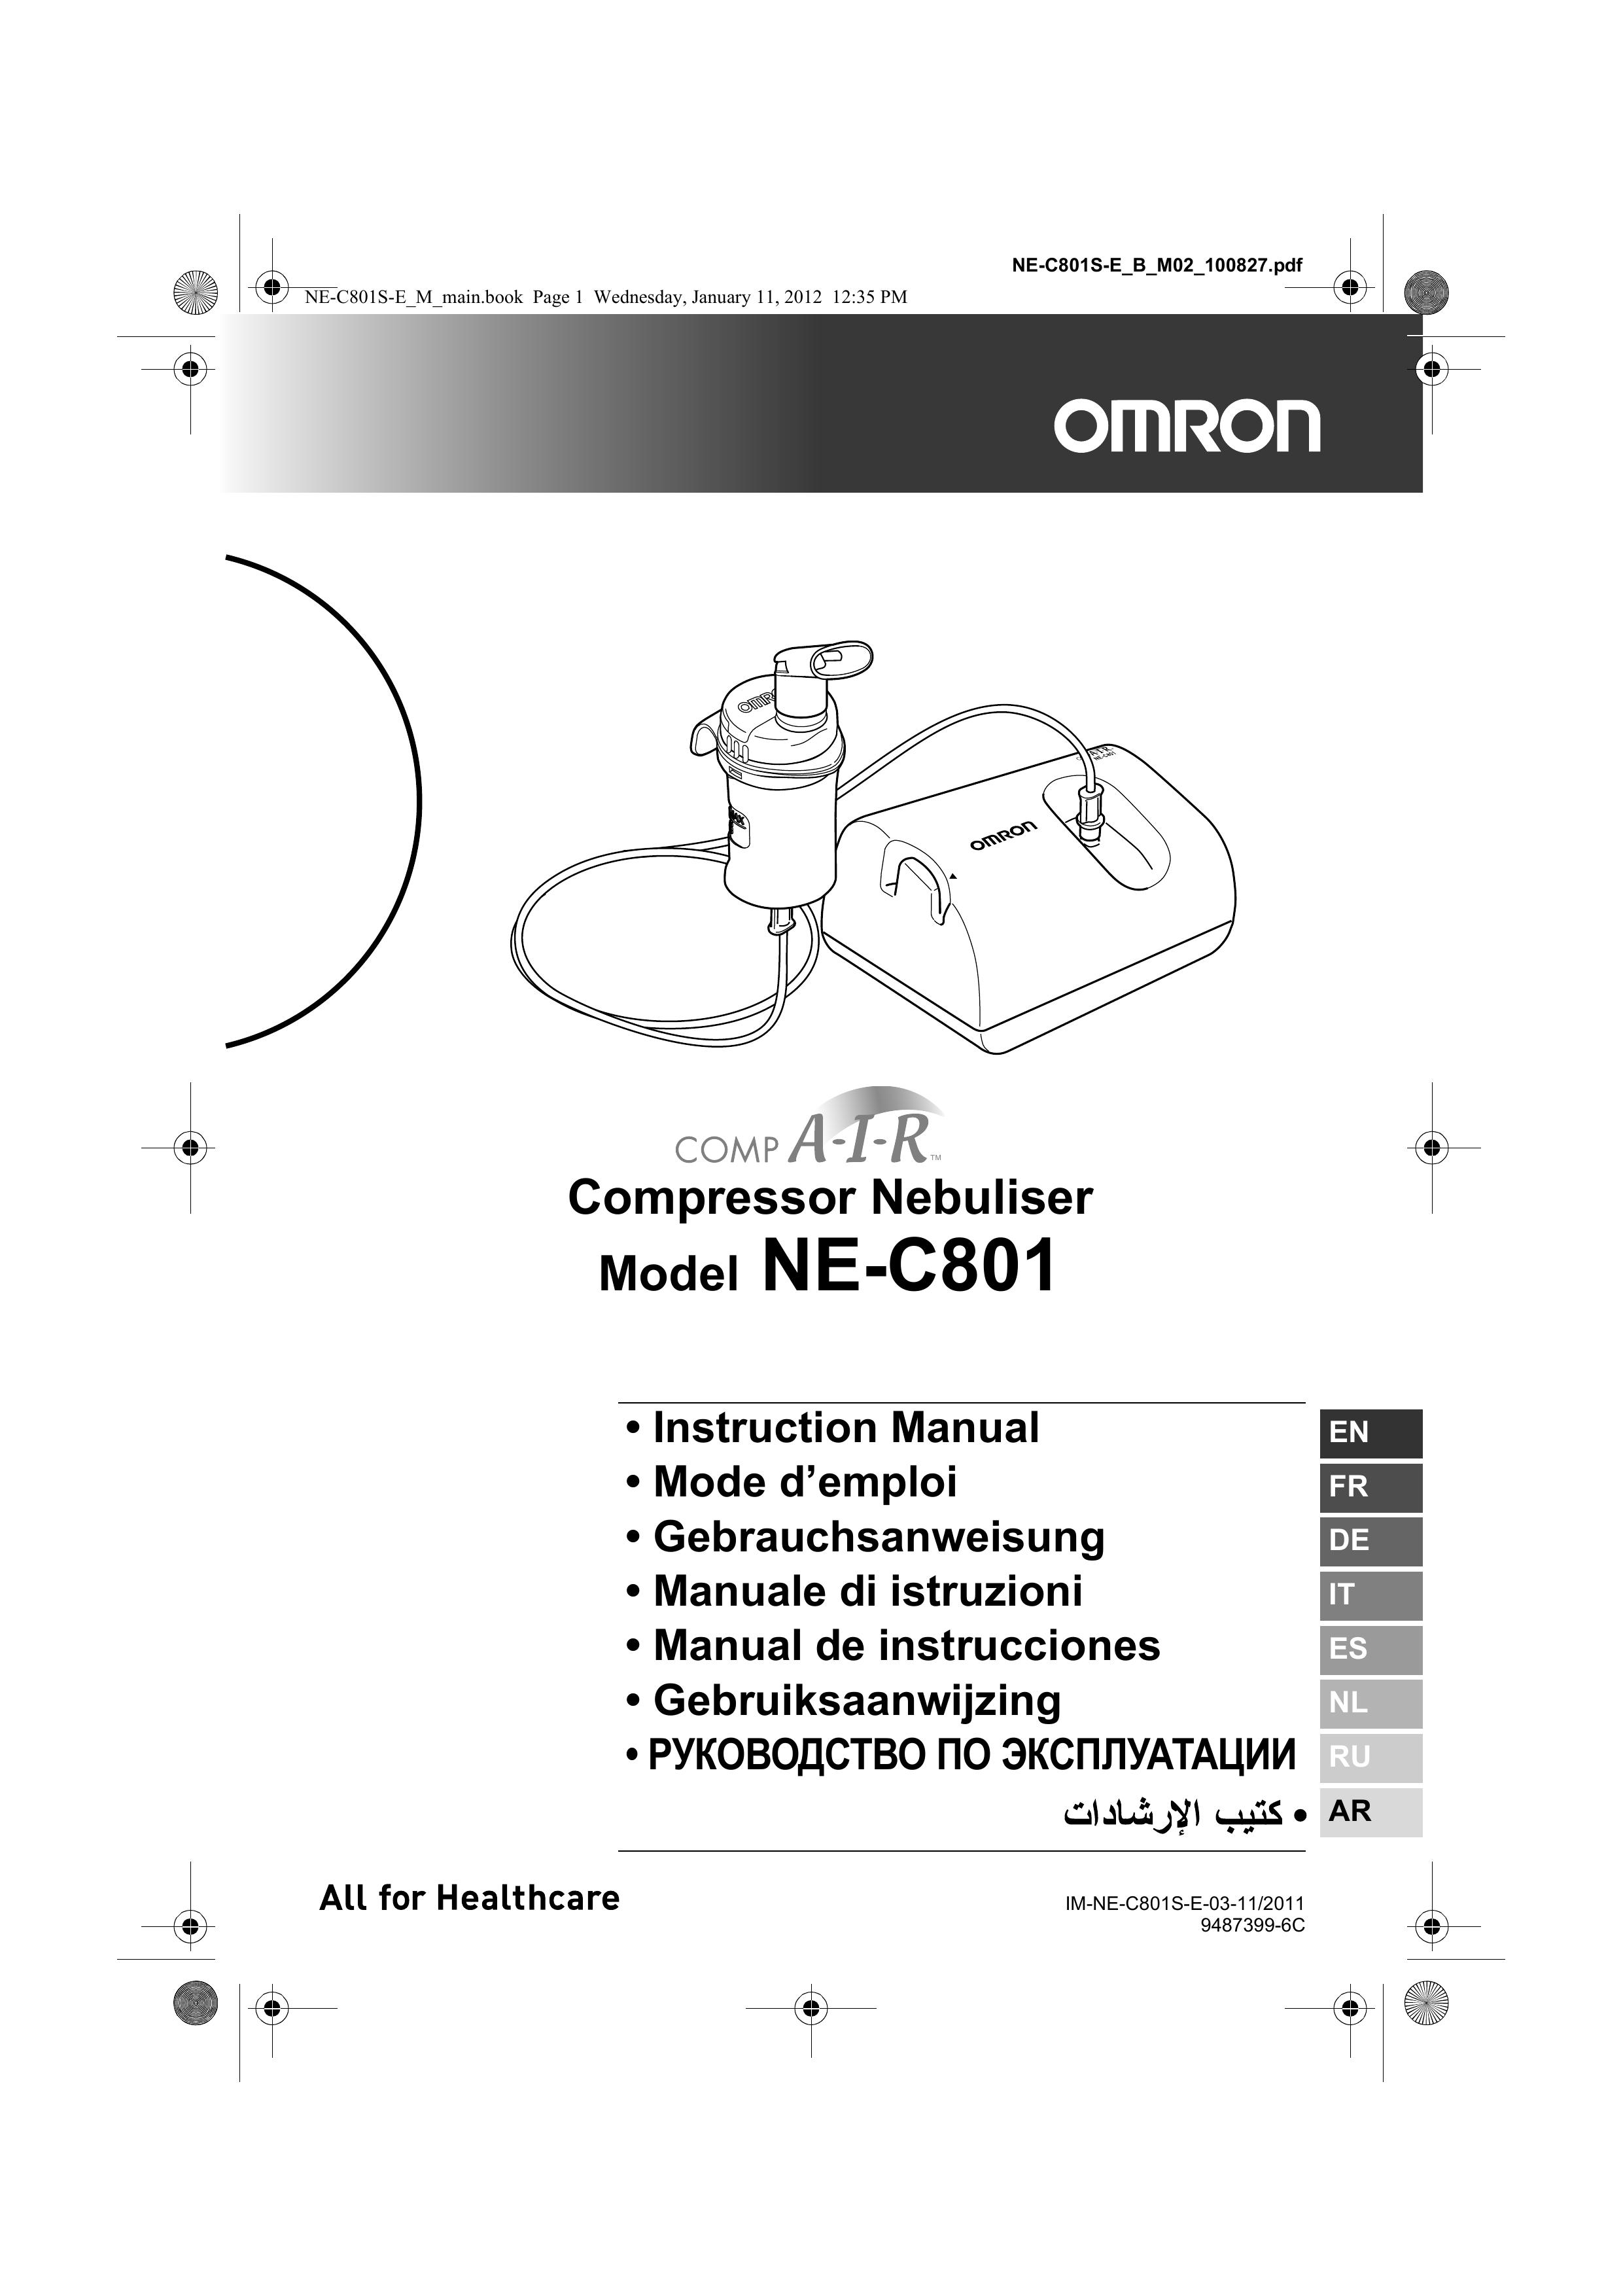 Omron ne-c801 Respiratory Product User Manual